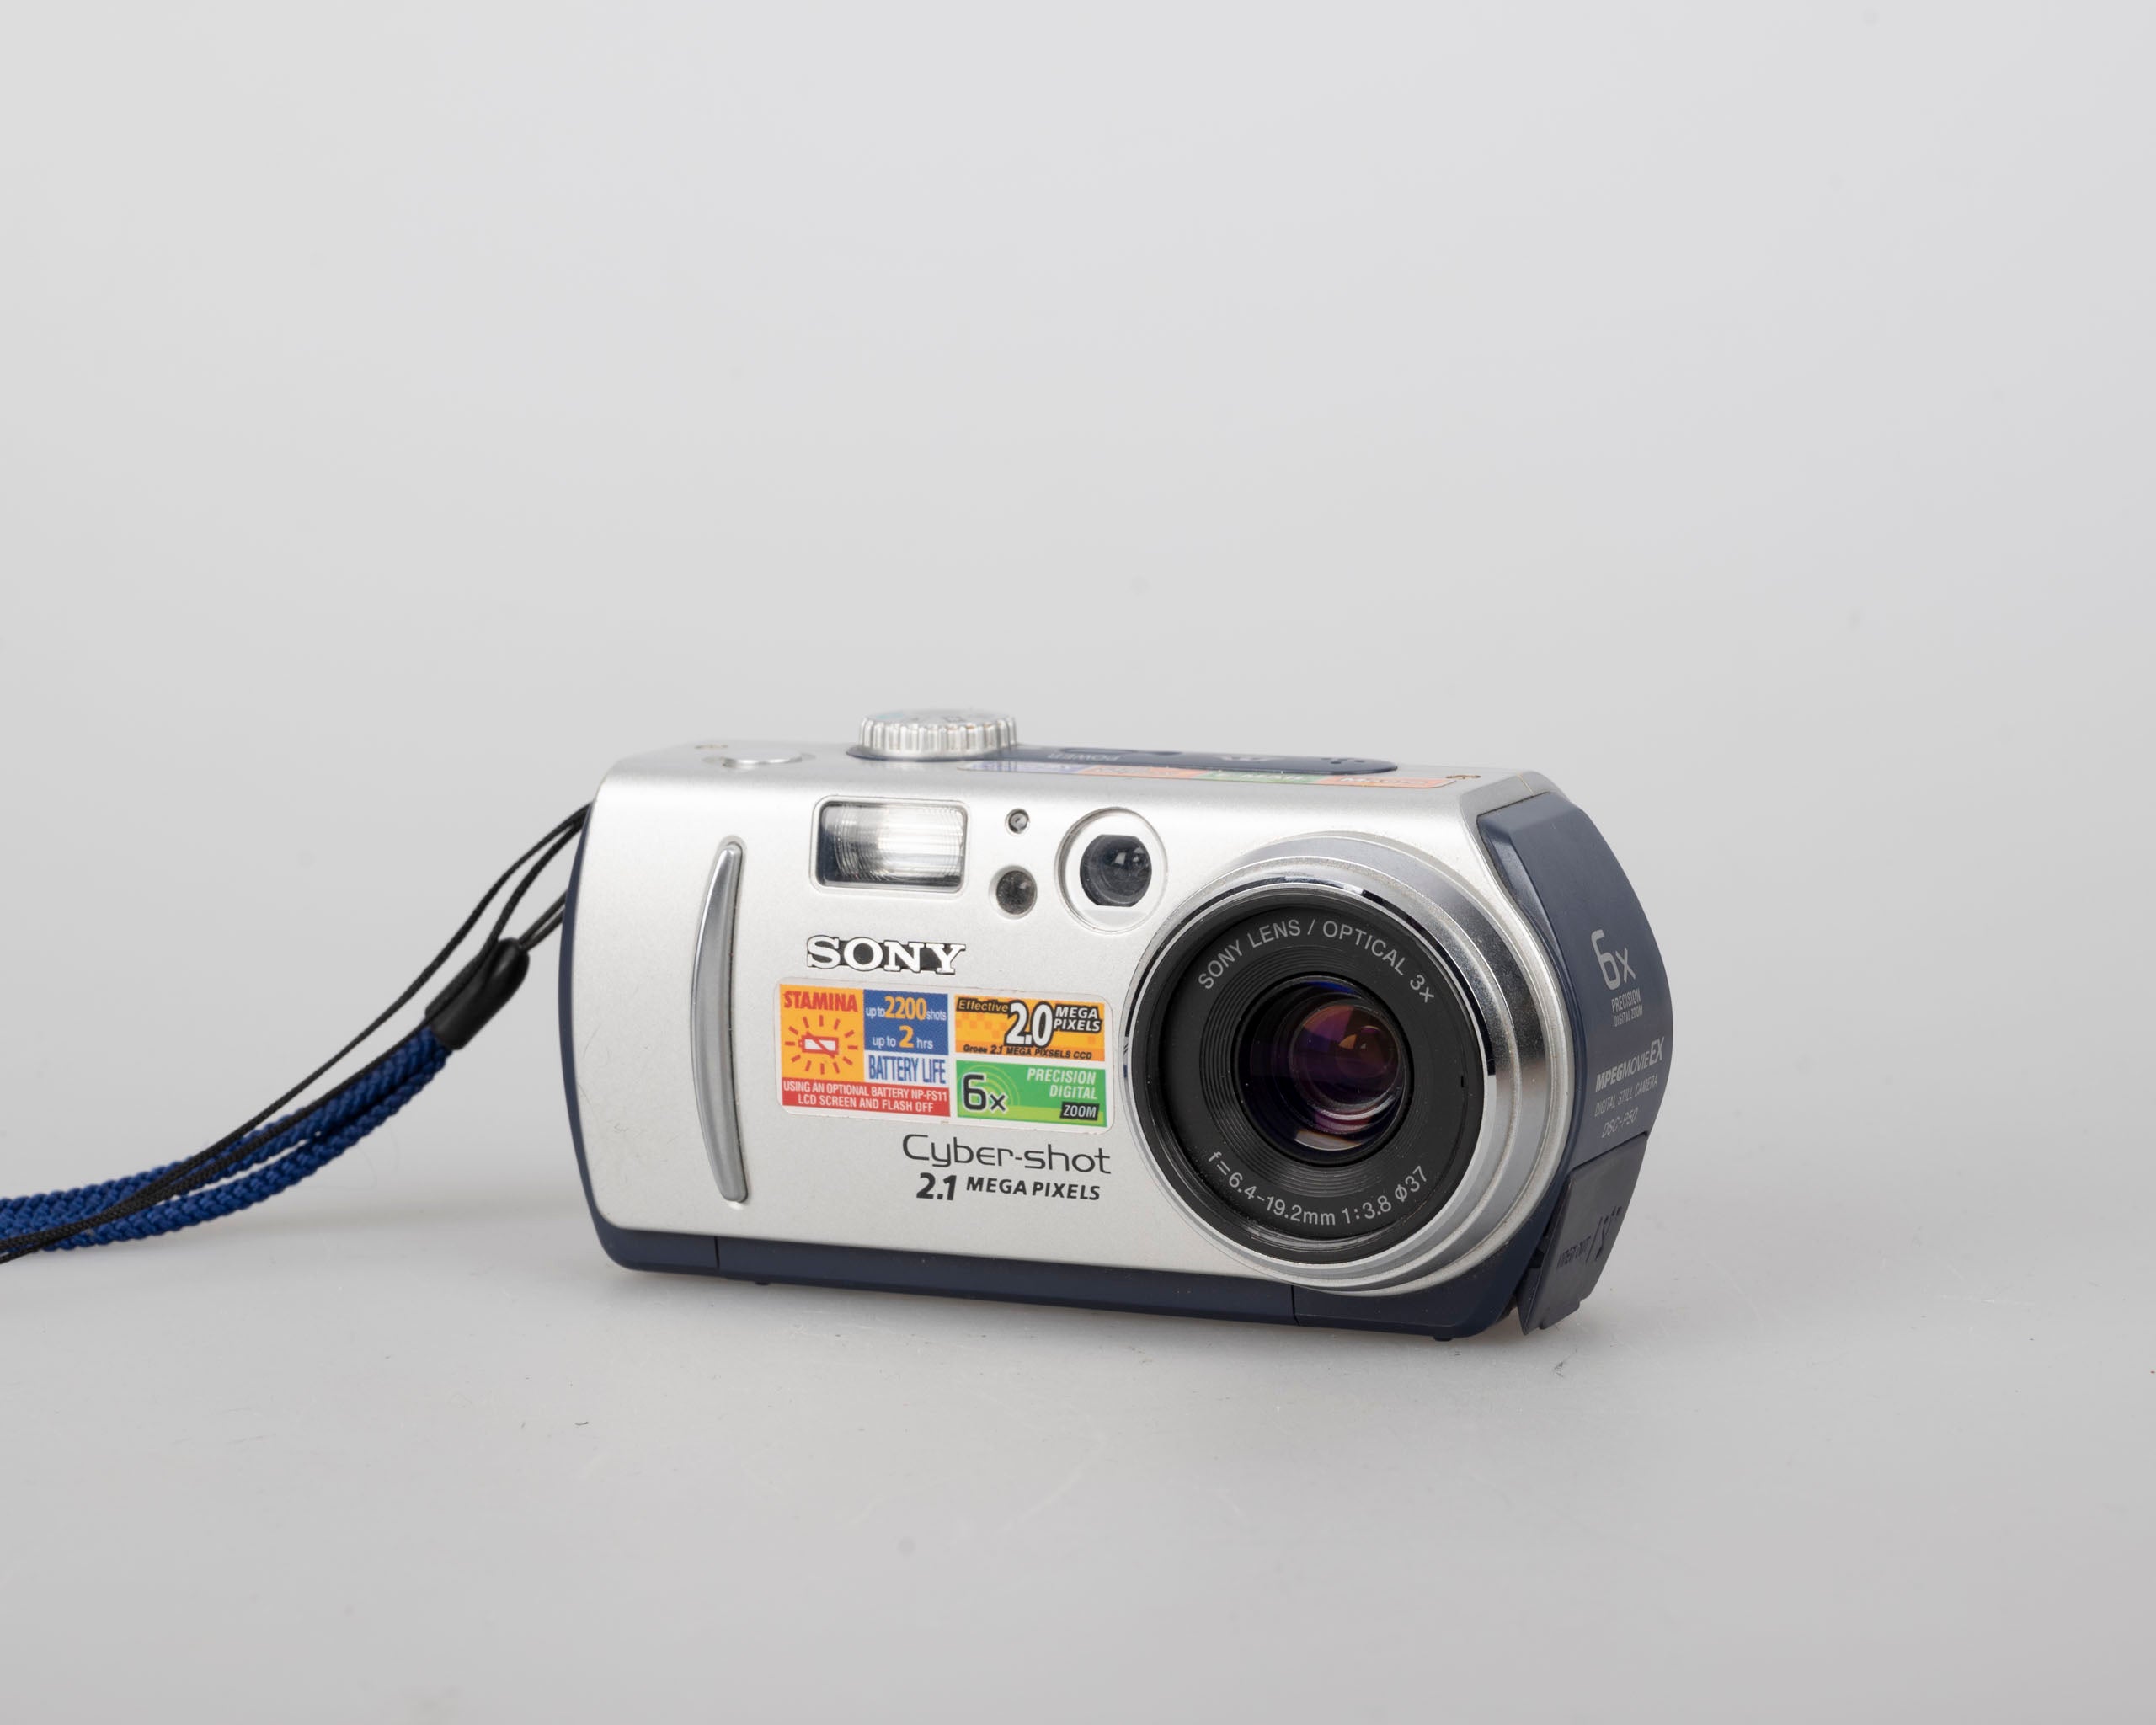 Sony Cyber-Shot DSC-P50 2.1 MP CCD sensor digicam (uses AA 